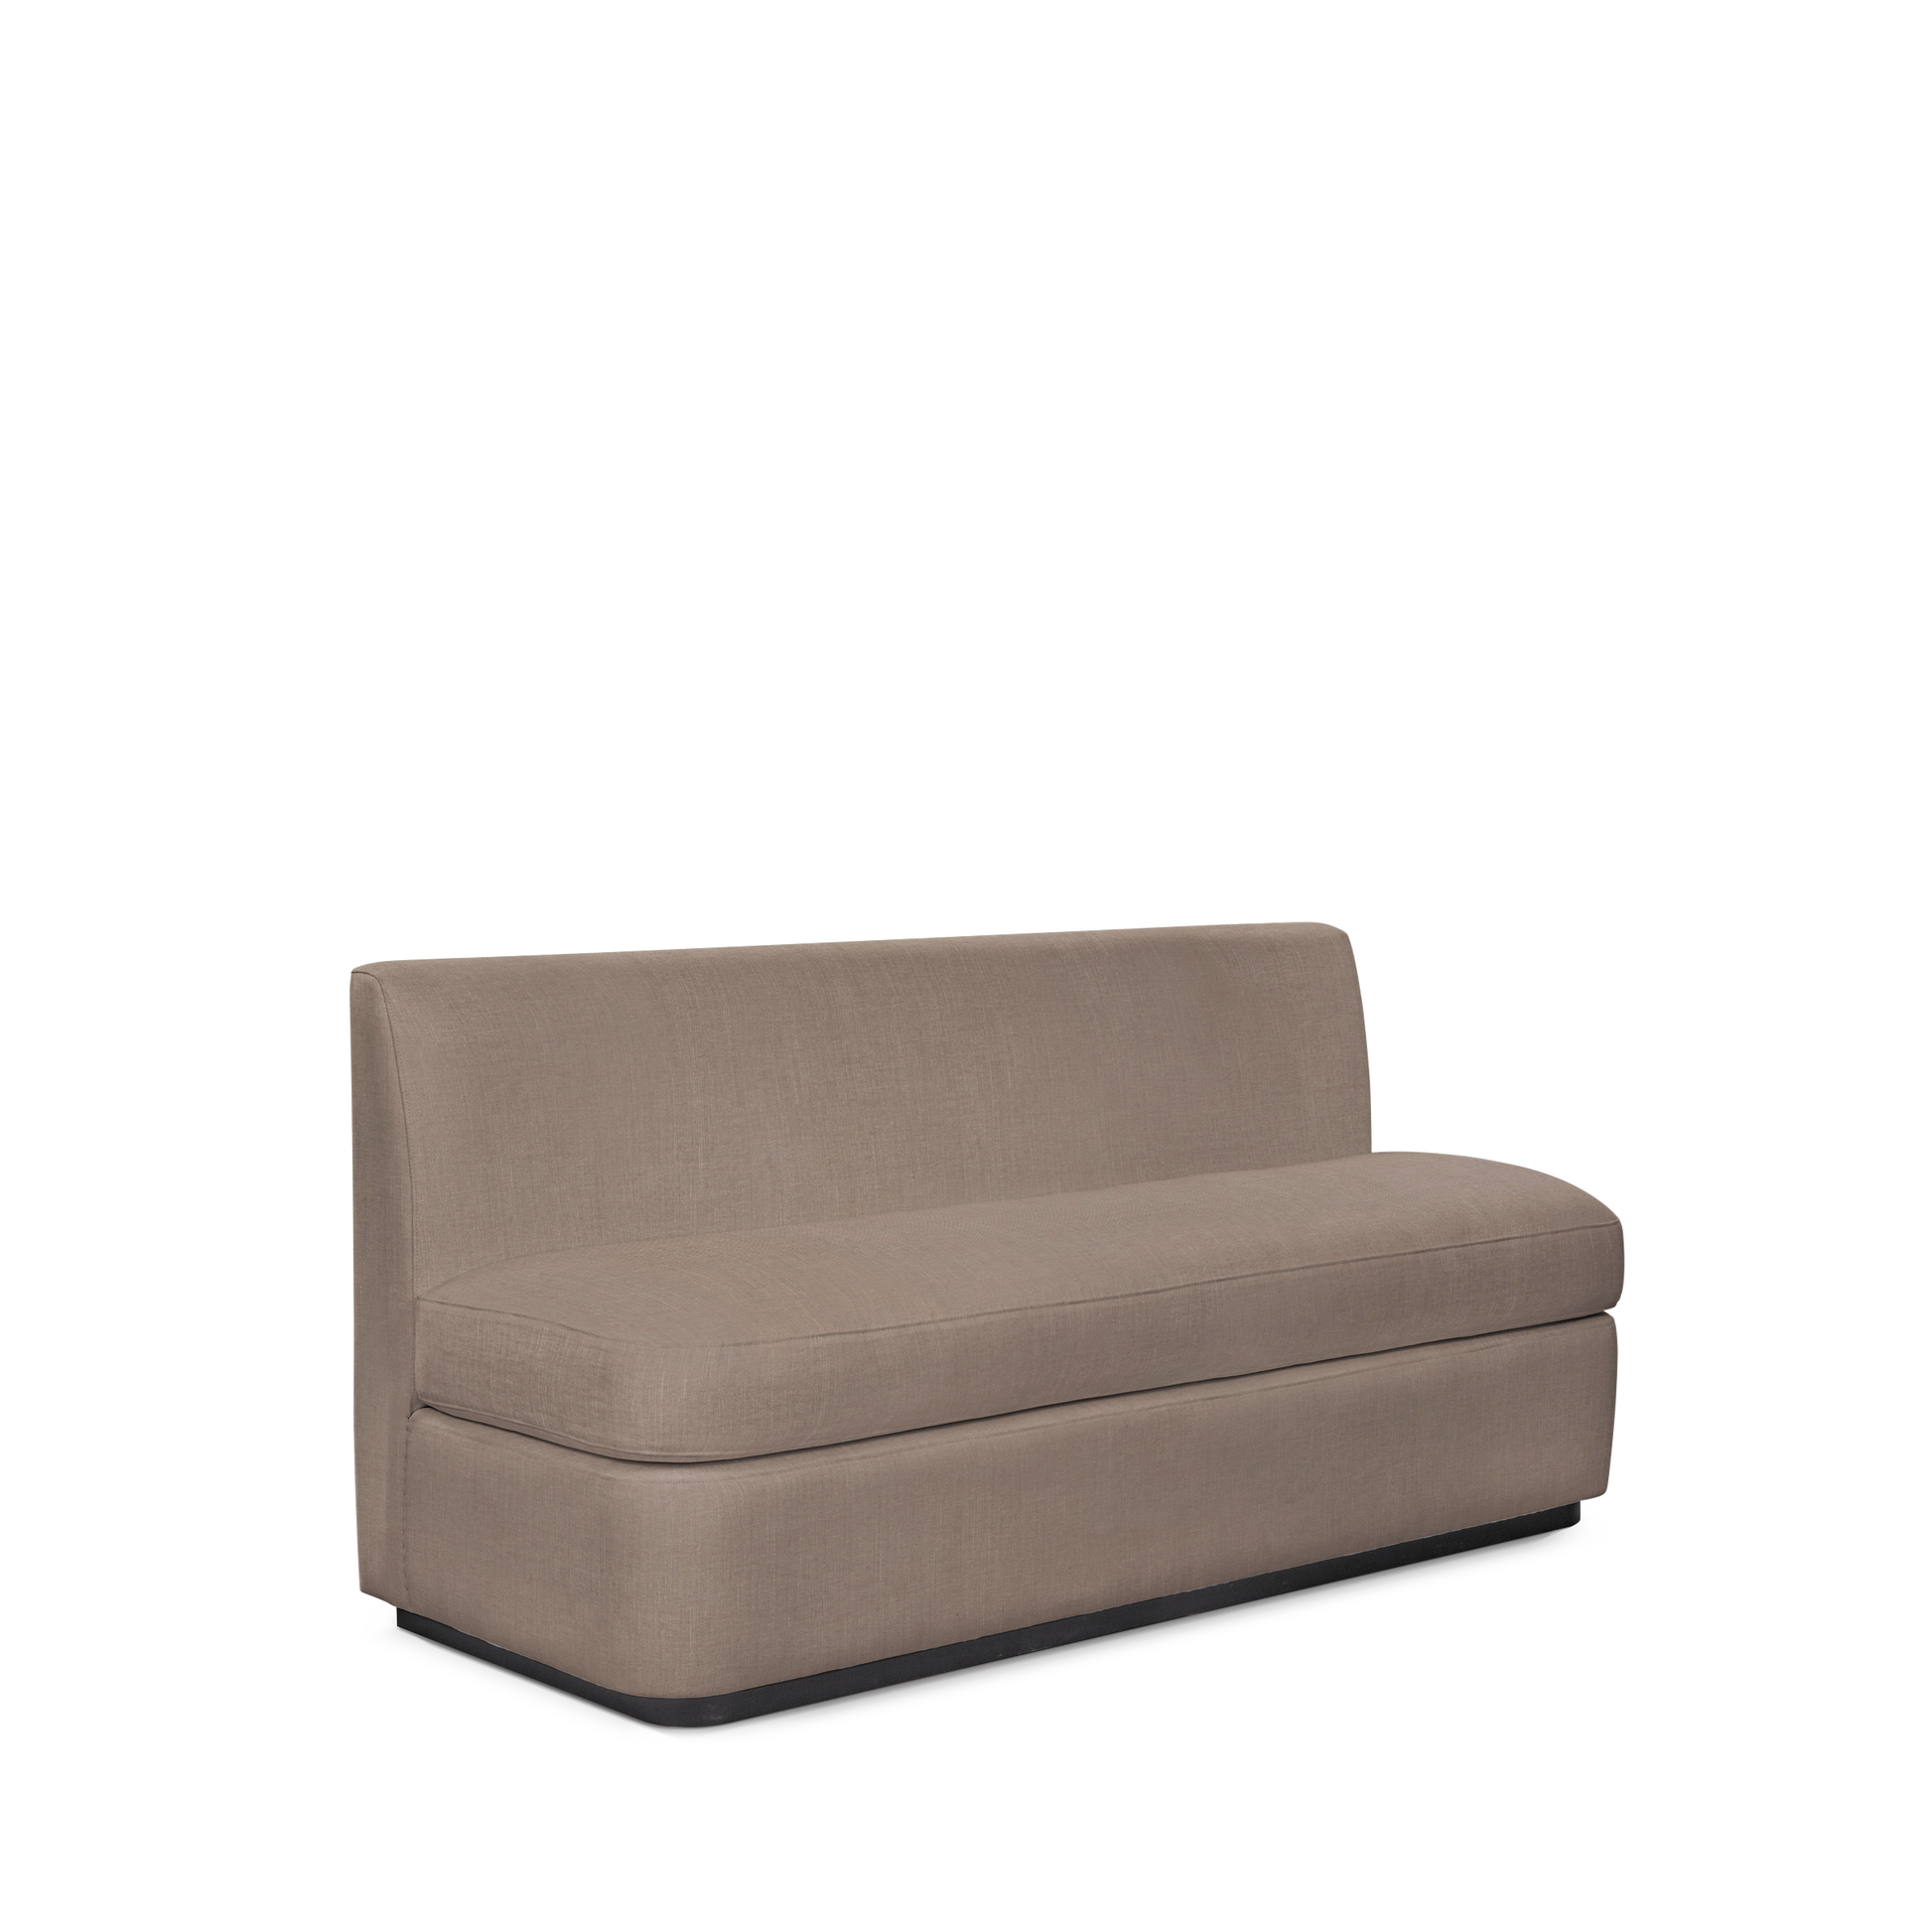  CALMA KITCHEN 3-seater sofa with light brown textile